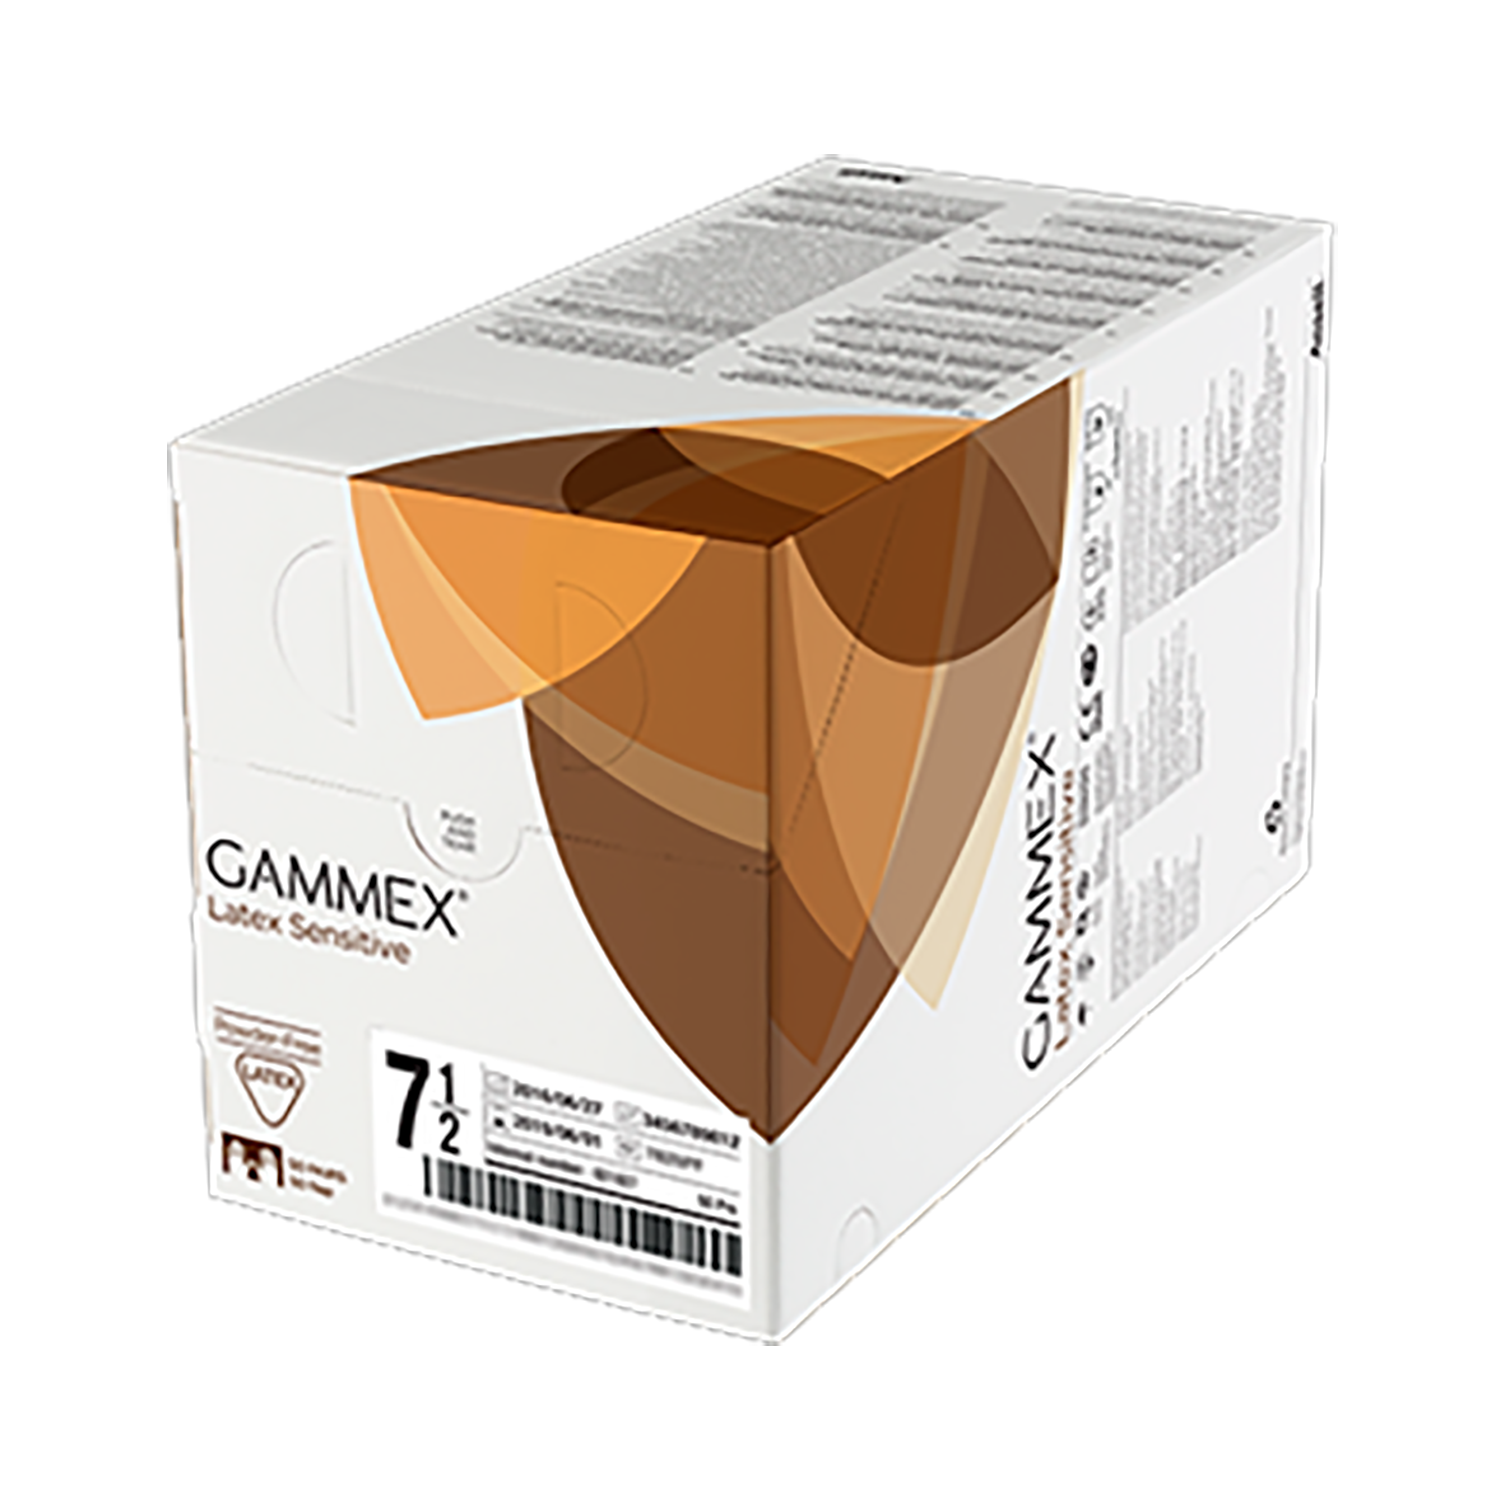 Gammex Latex Sensitive Gloves | Powder Free | Sterile | Pack of 50 Pairs